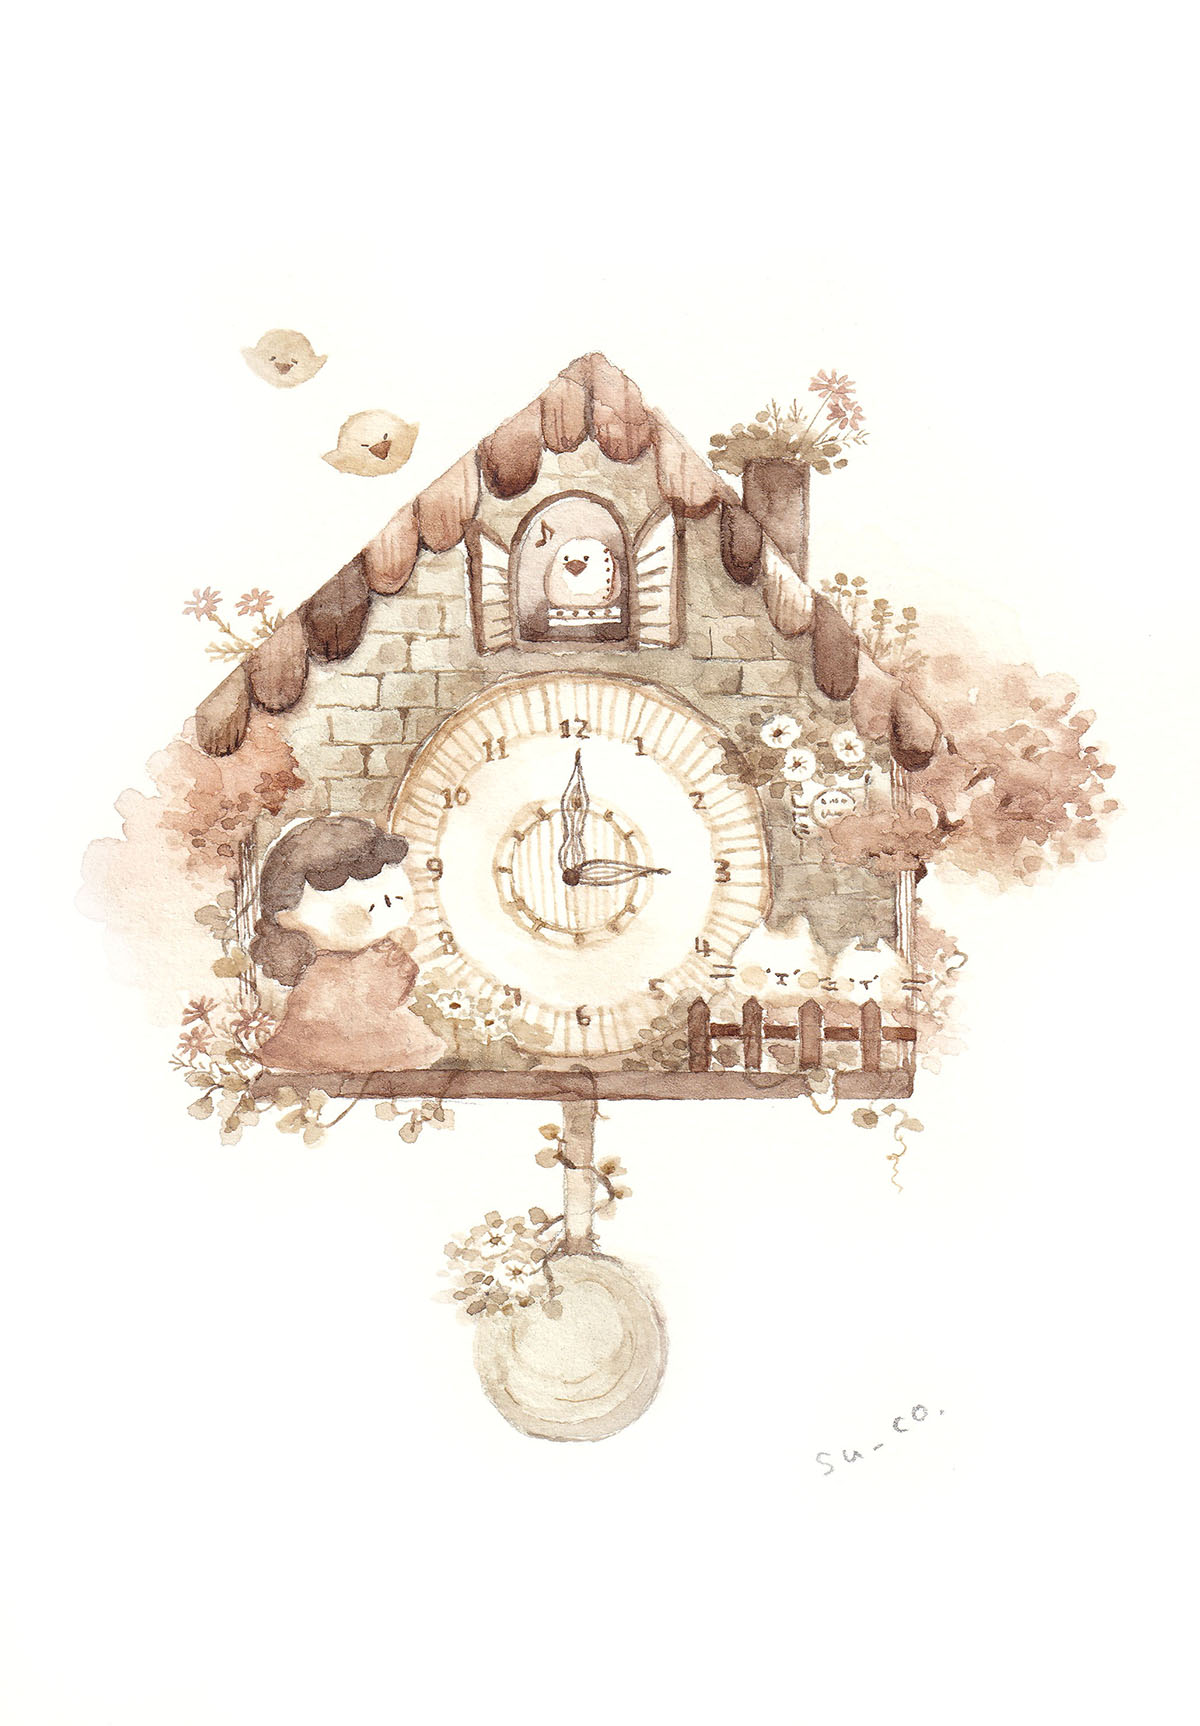 Su Co 時の記念日 偶々最近描きました 時計 の絵2点です 今後 難しいですが懐中時計も描いてみたいです イラスト 透明水彩 T Co 1z3bqd7brb Twitter